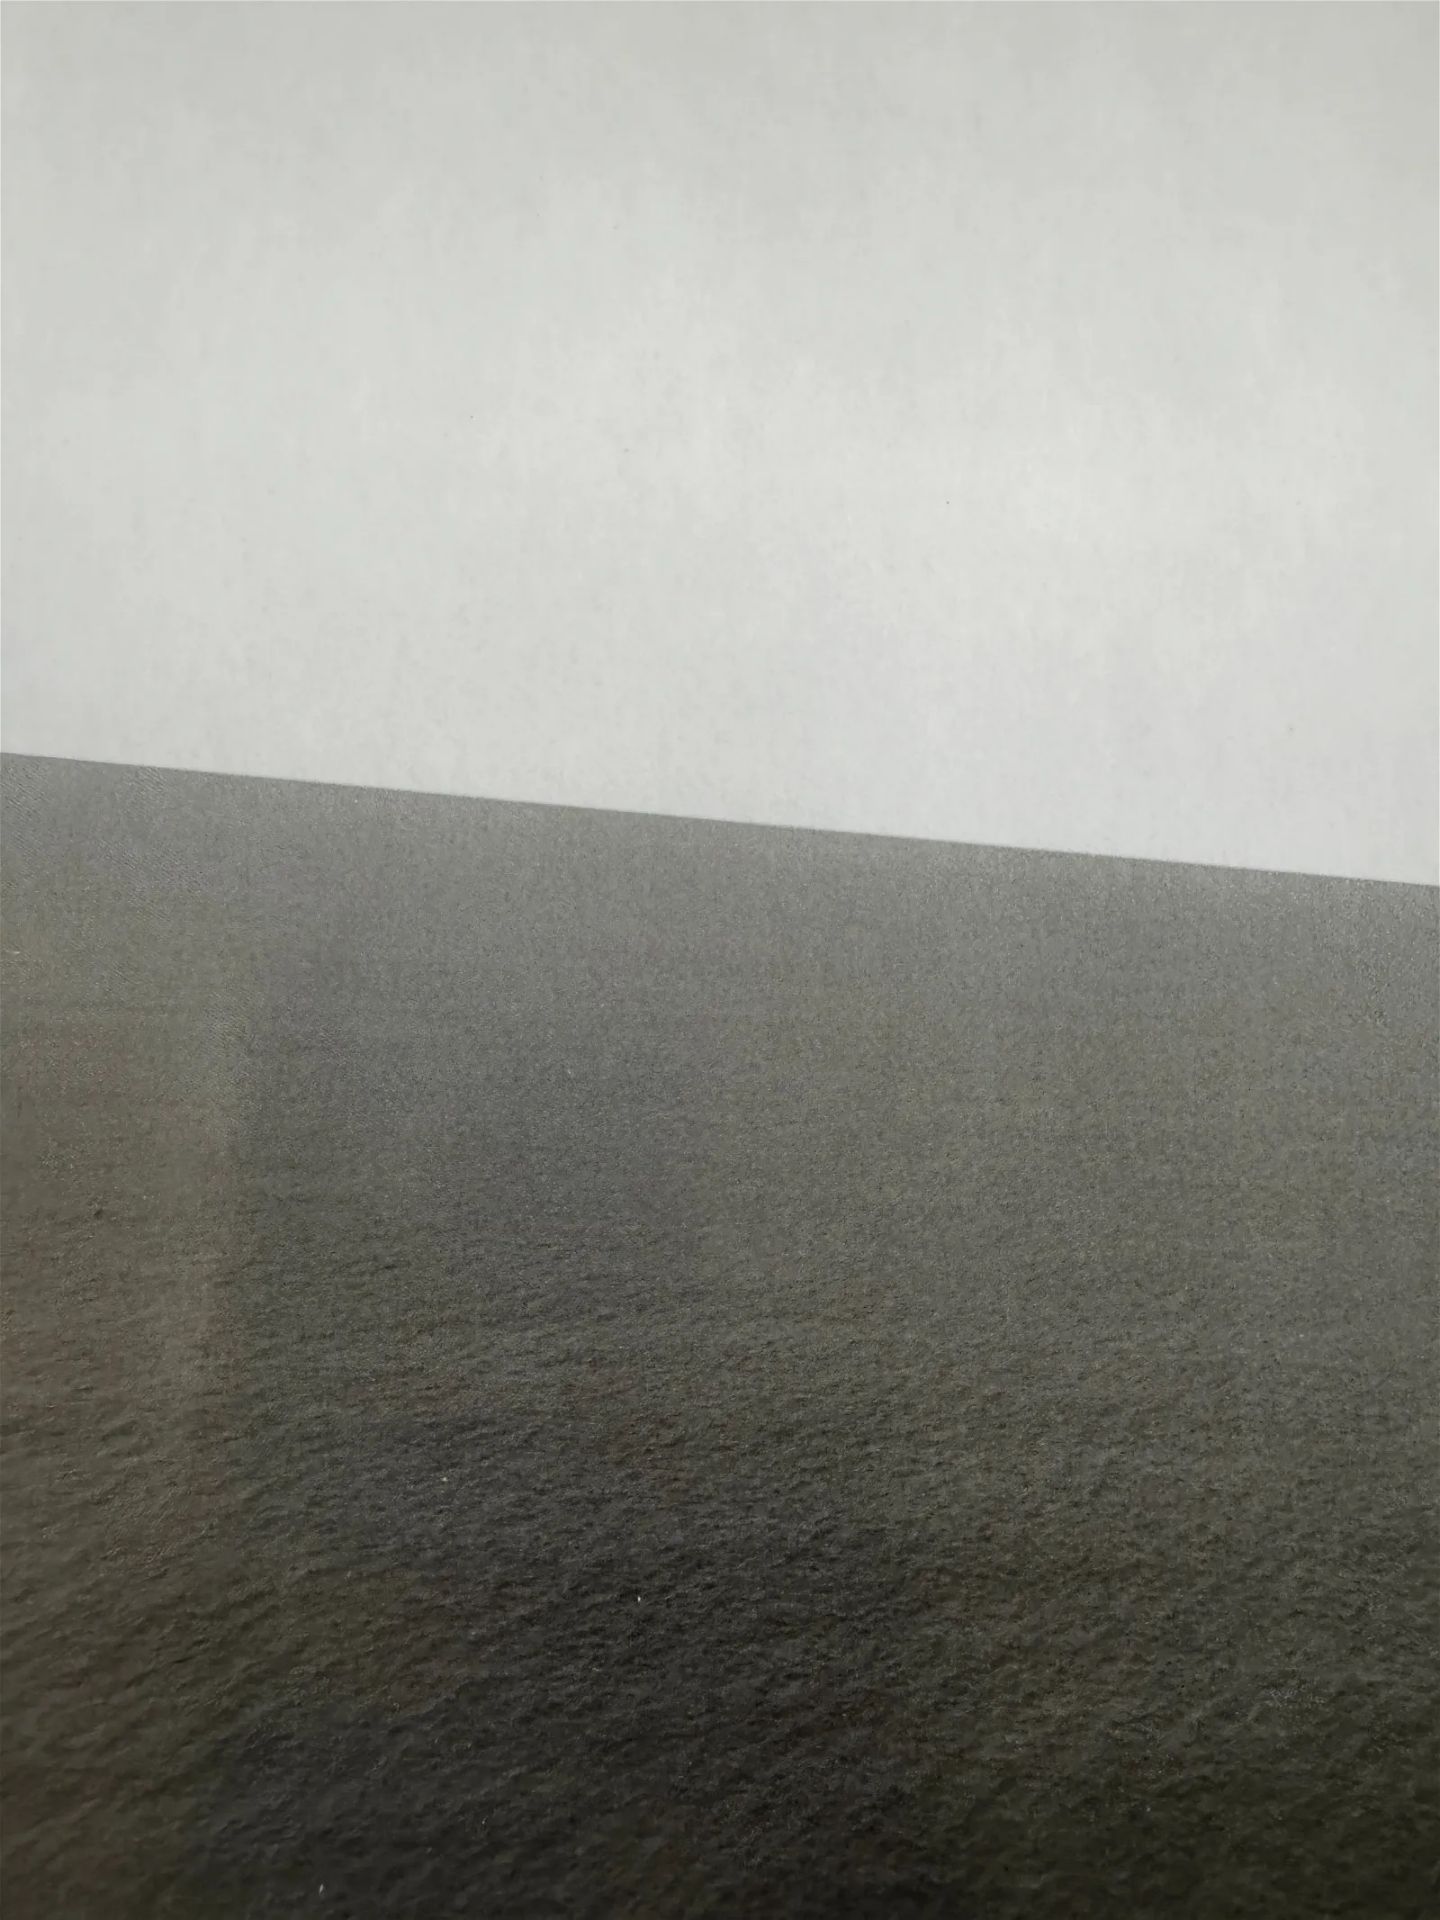 Hiroshi Sugimoto "Yellow Sea, Cheju, 1992" Print - Image 4 of 4